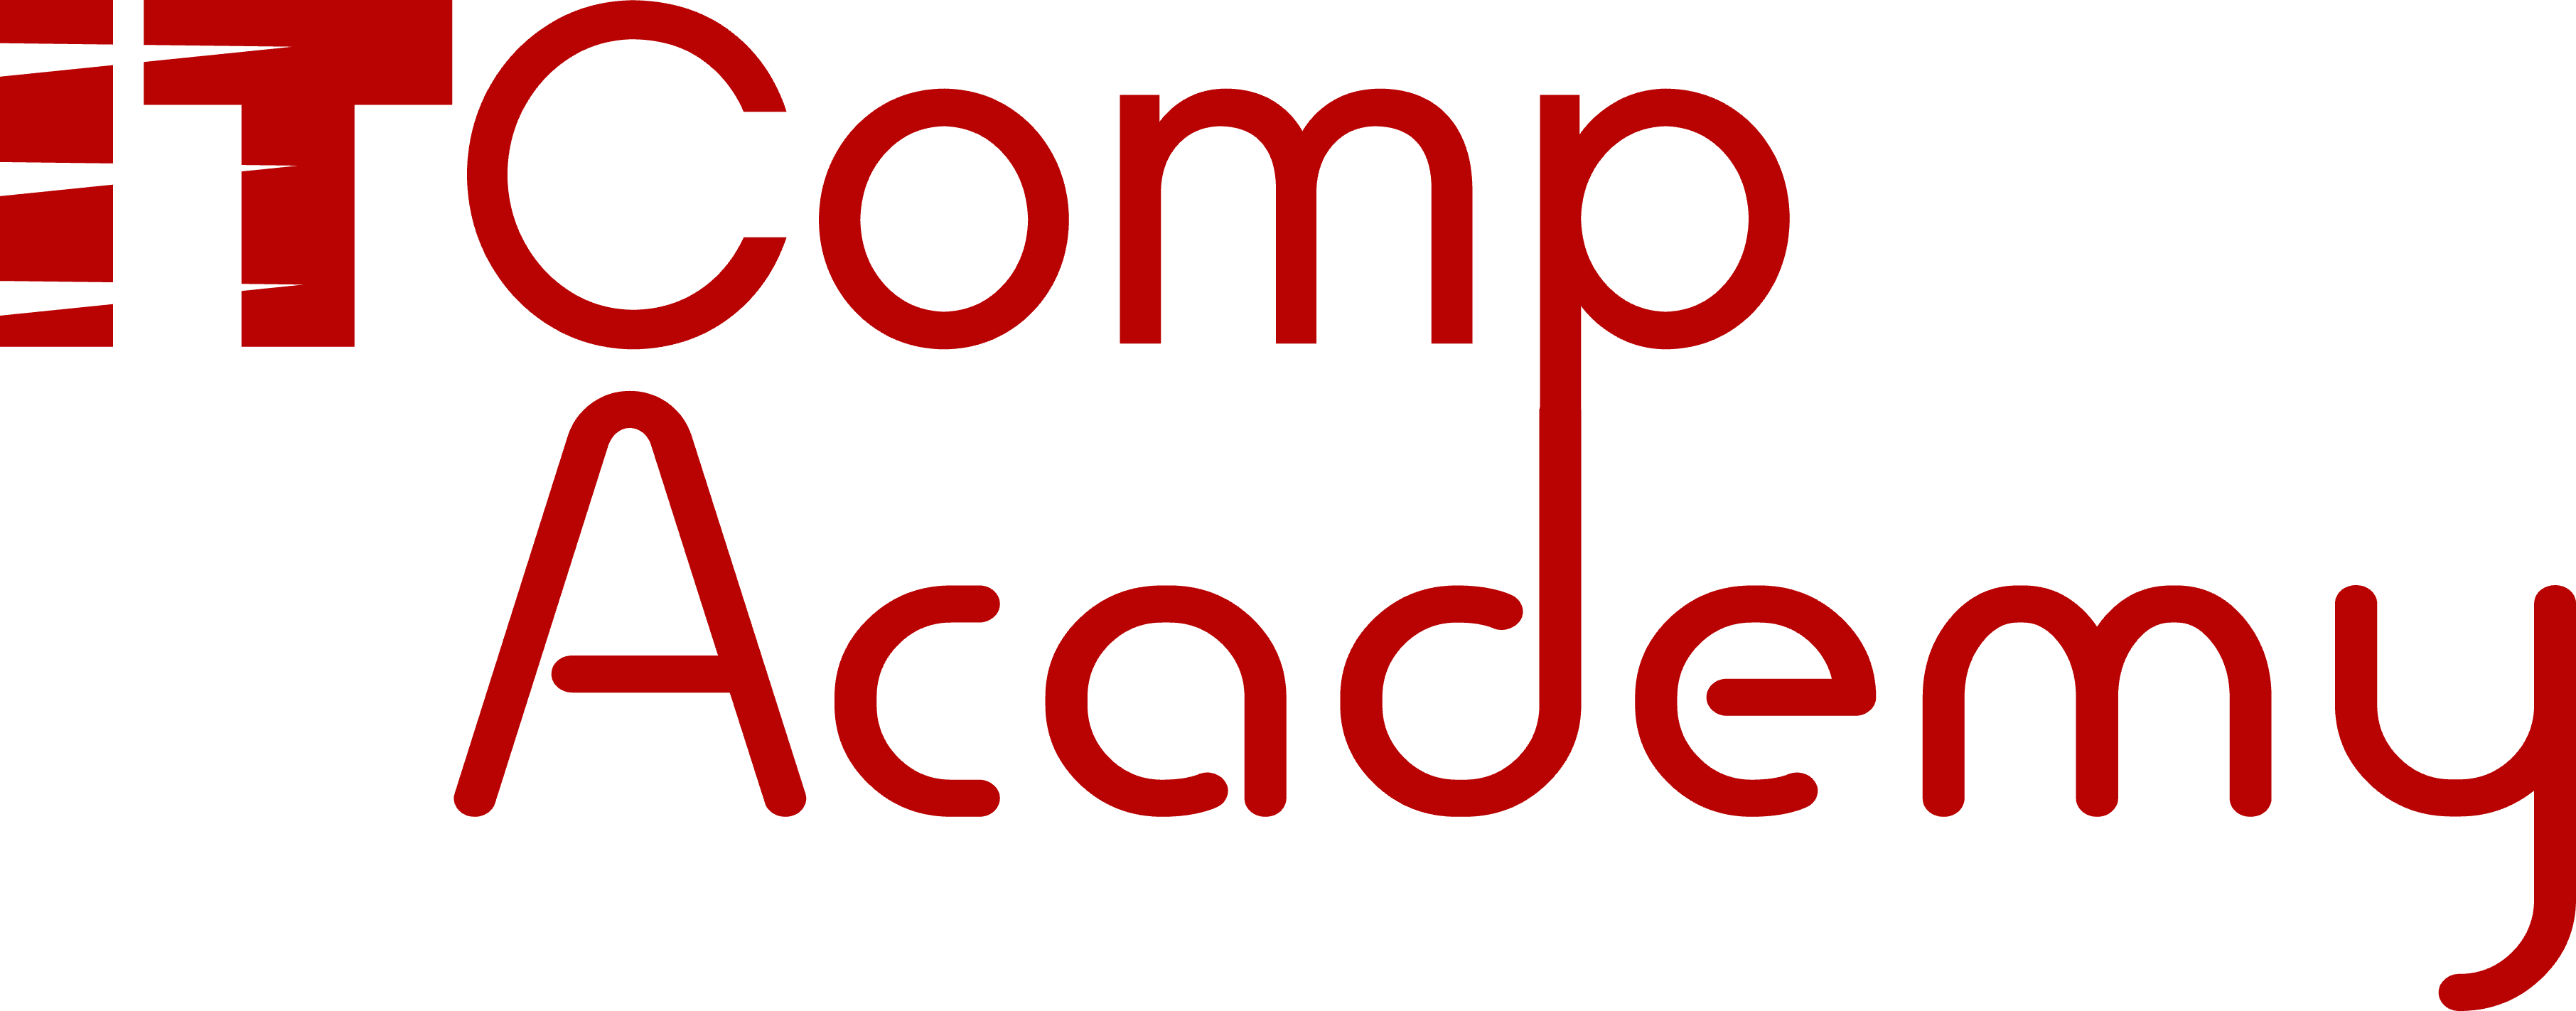 ITComp-academy.png